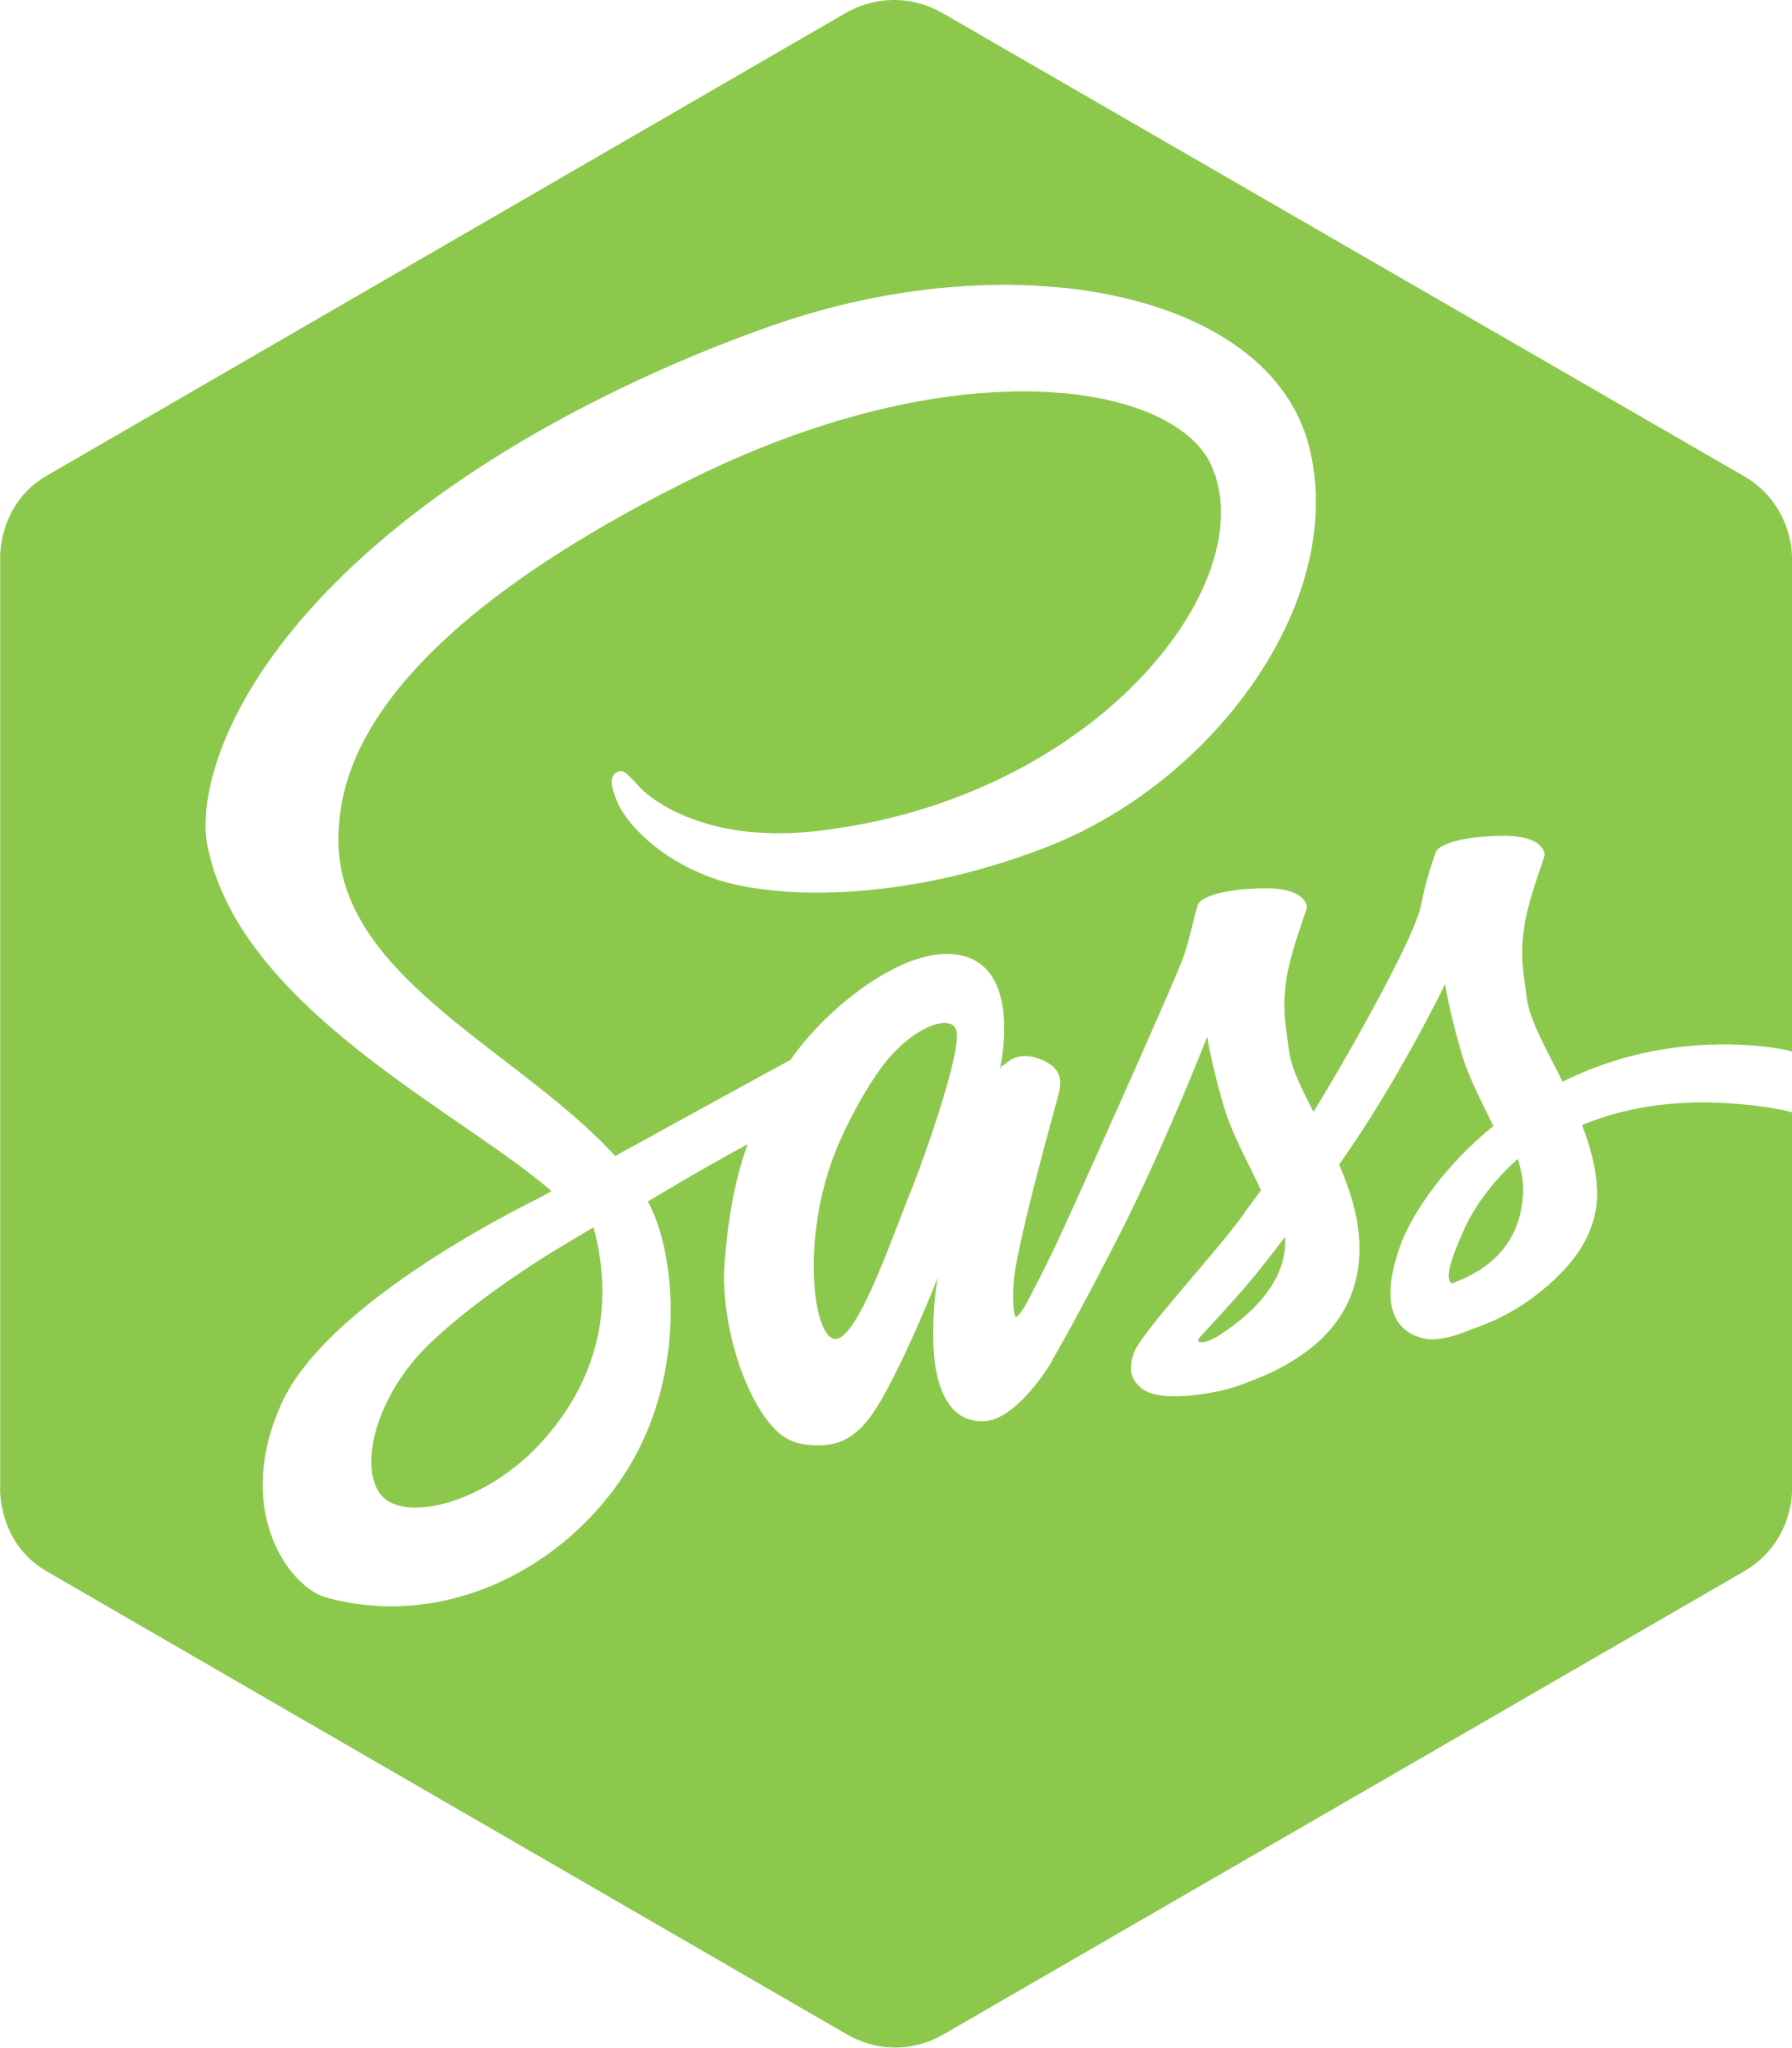 Node-Sass icon